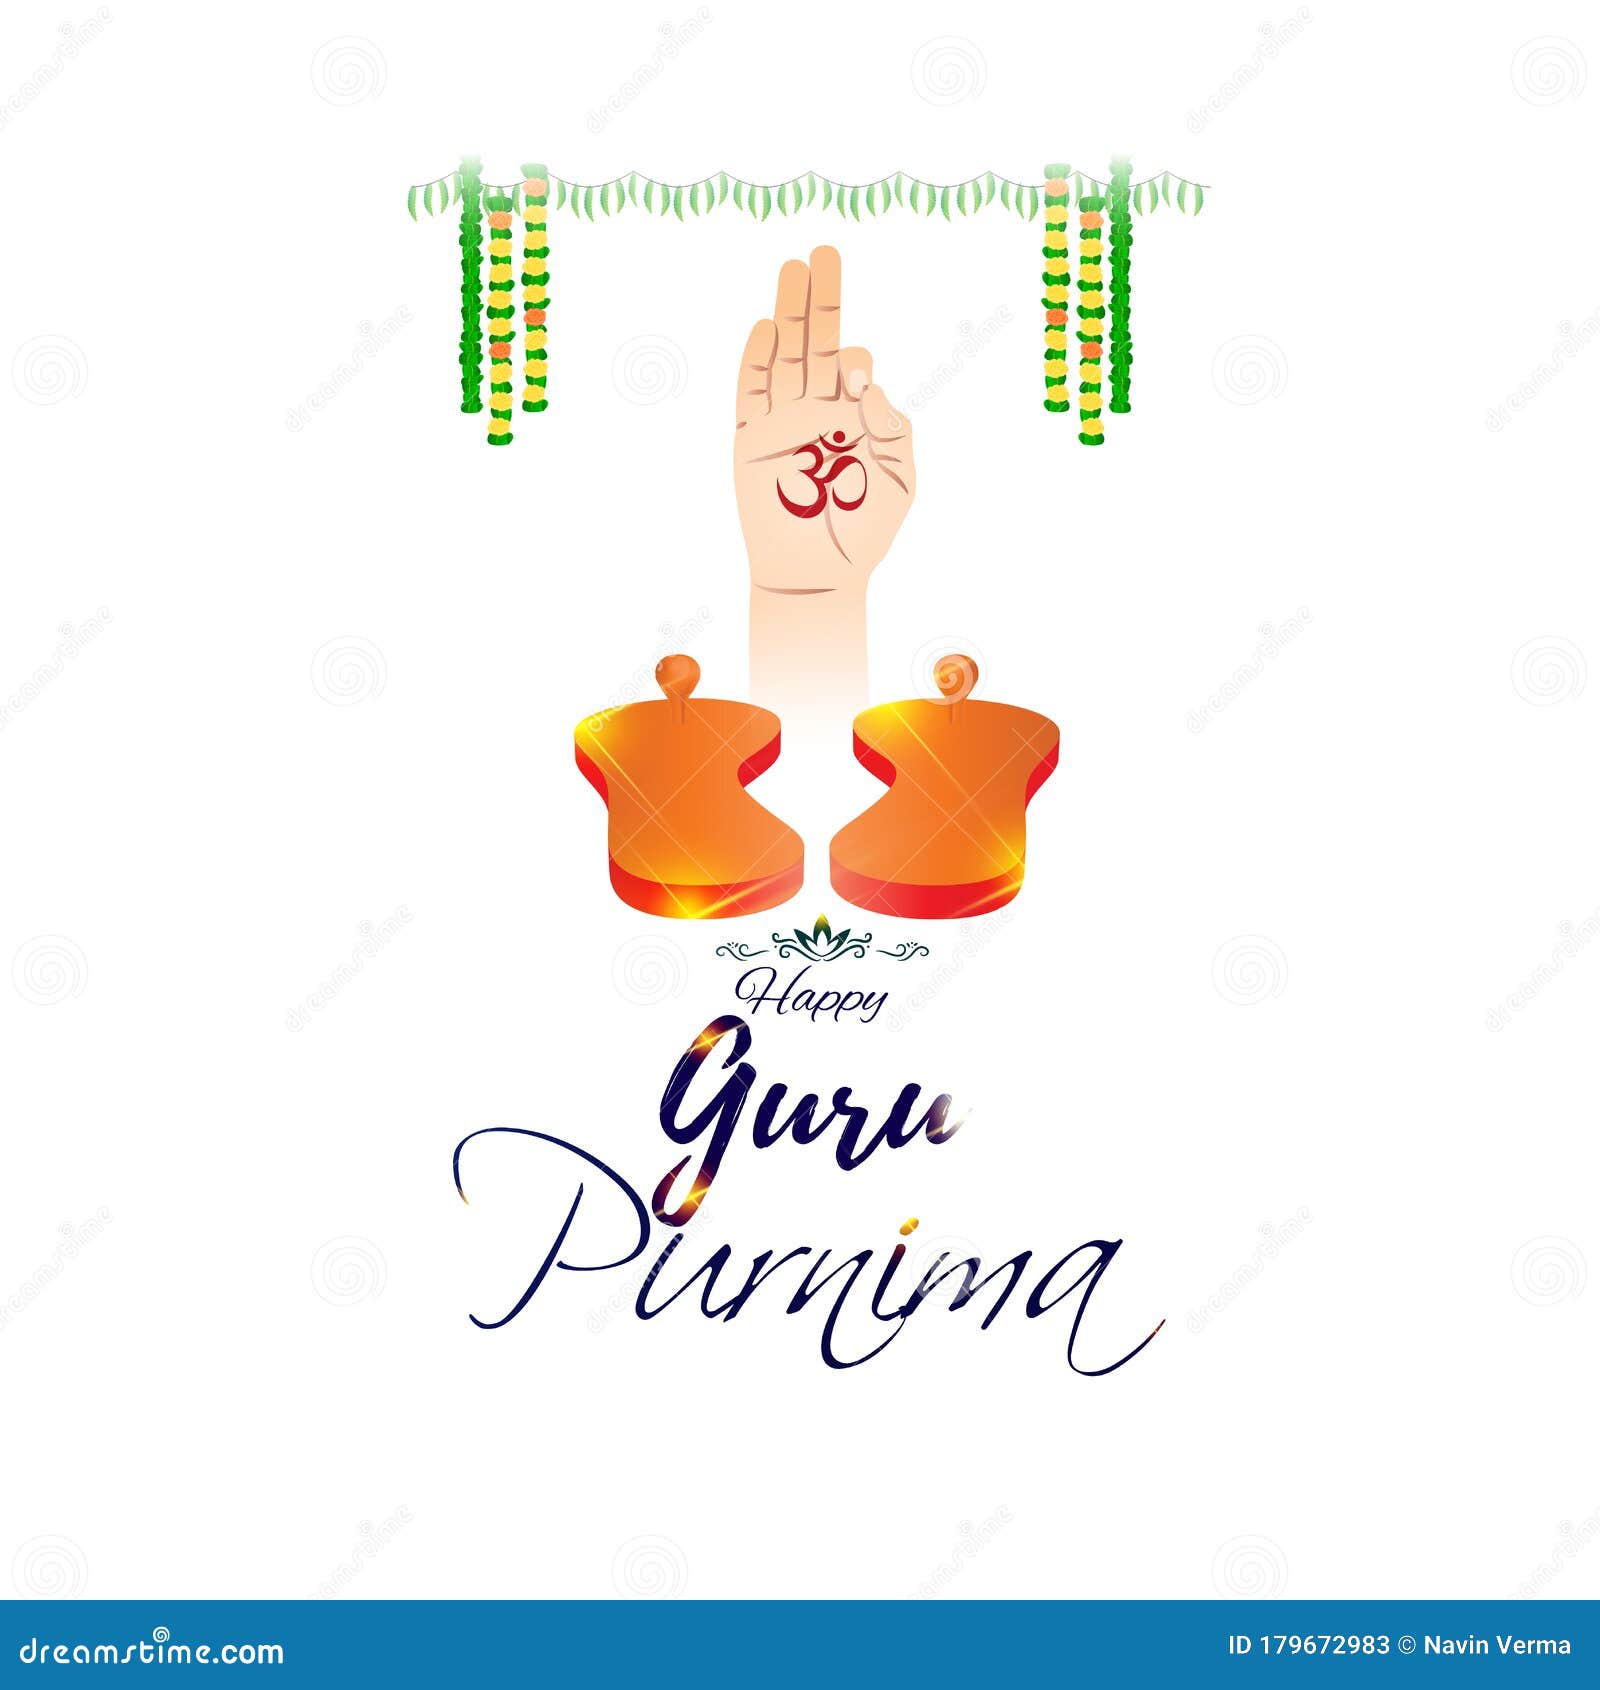 guru purnima indian festival greeting 02